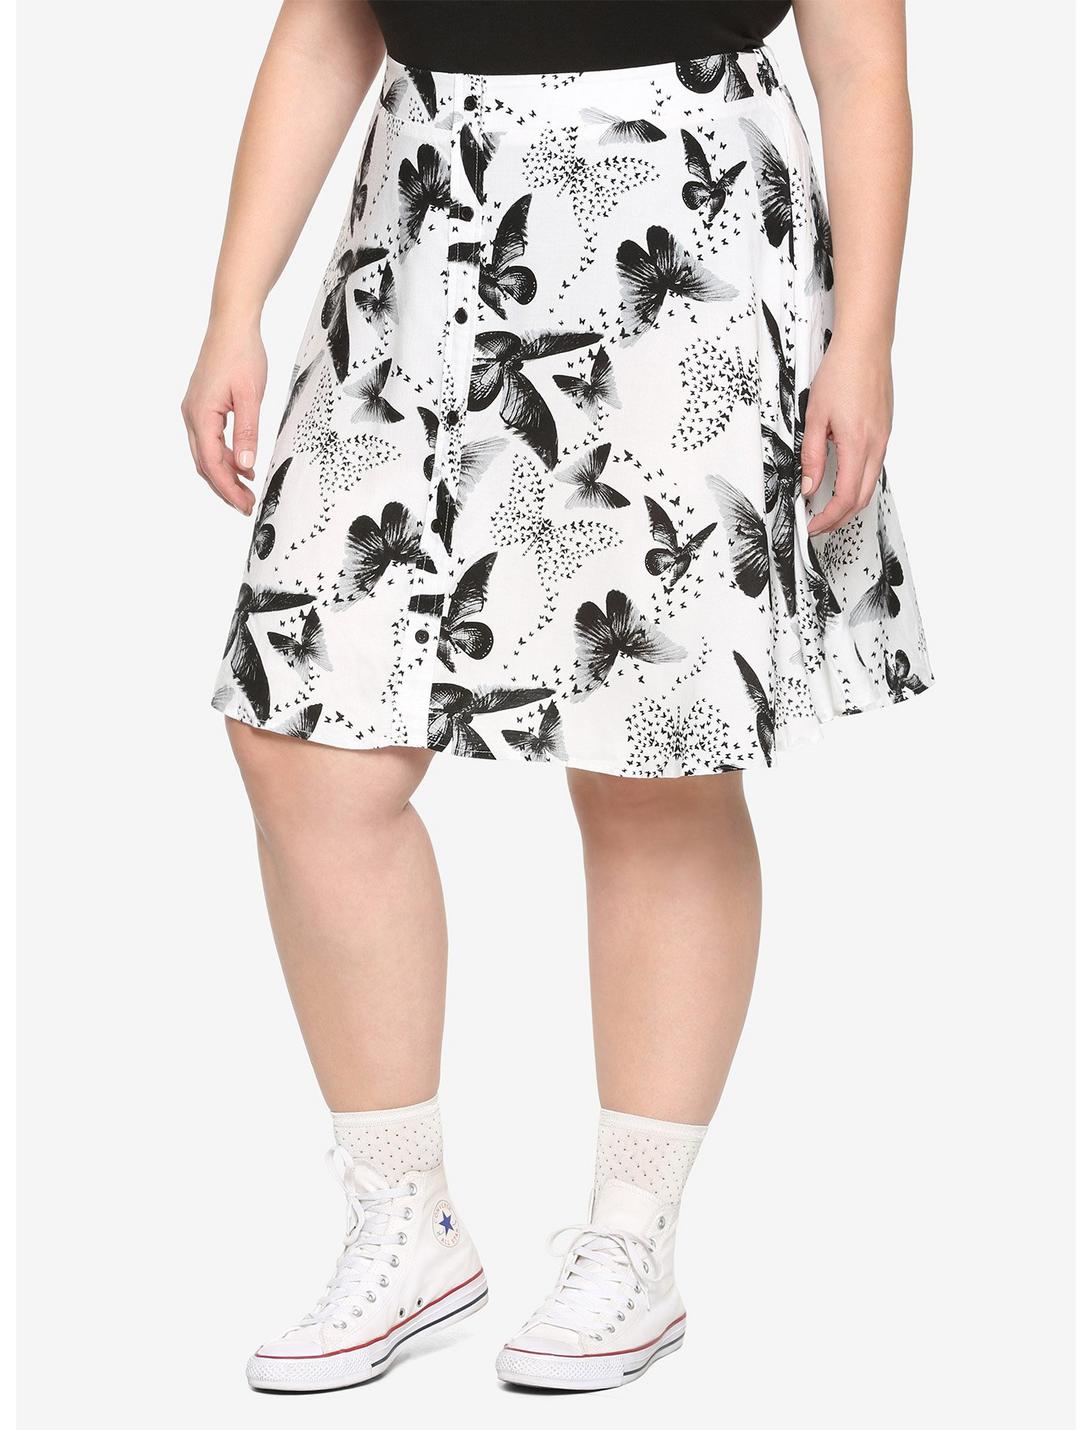 Black & White Butterfly Print Skirt Plus Size, MULTI, hi-res